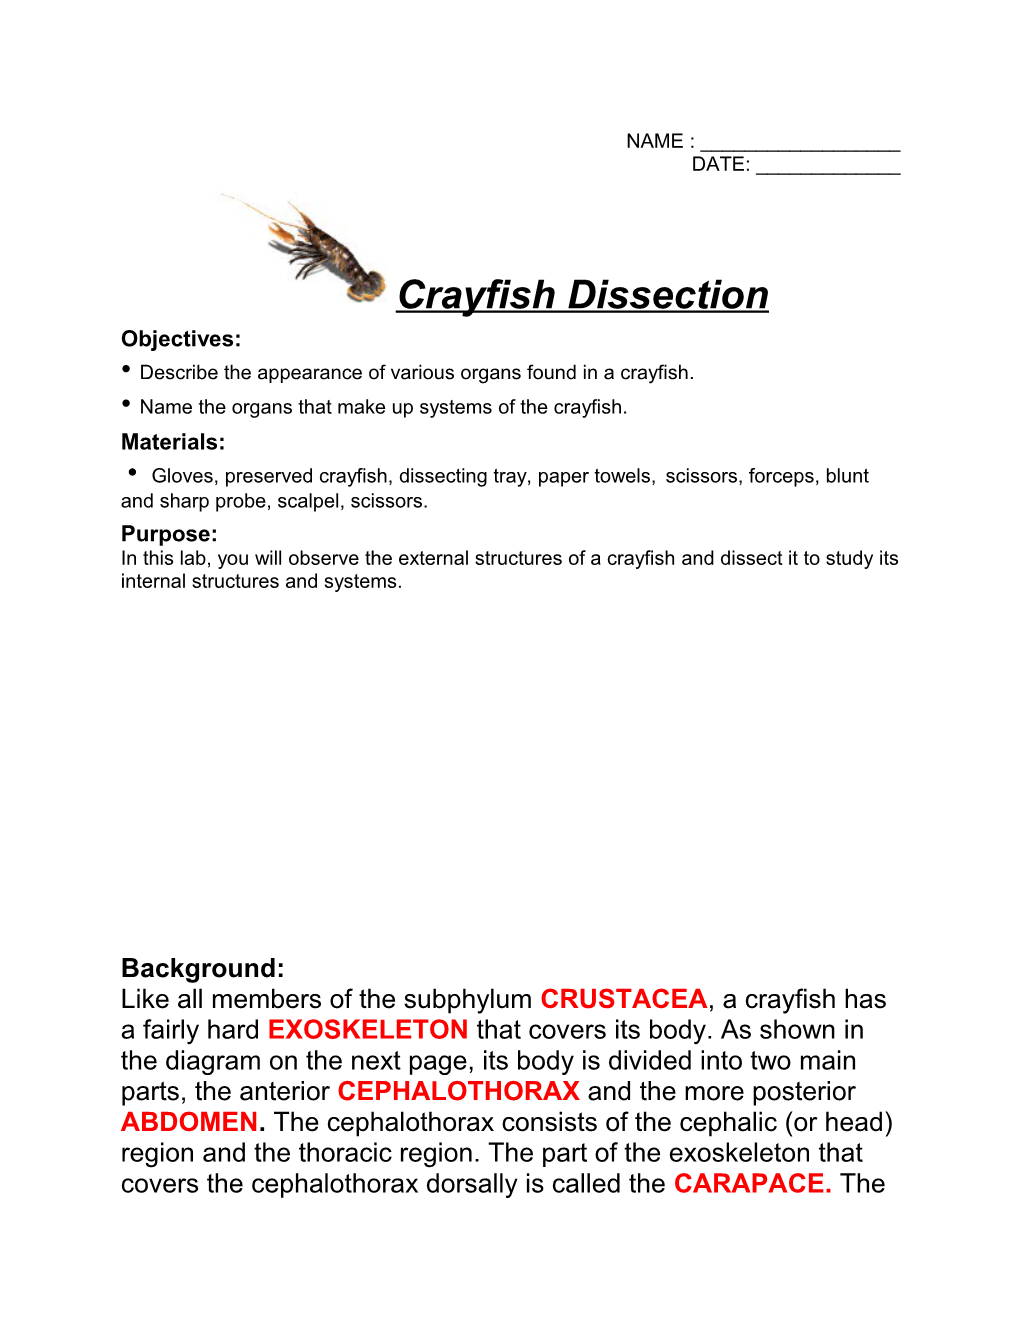 Procedure Part 1 External Anatomy of a Crayfish